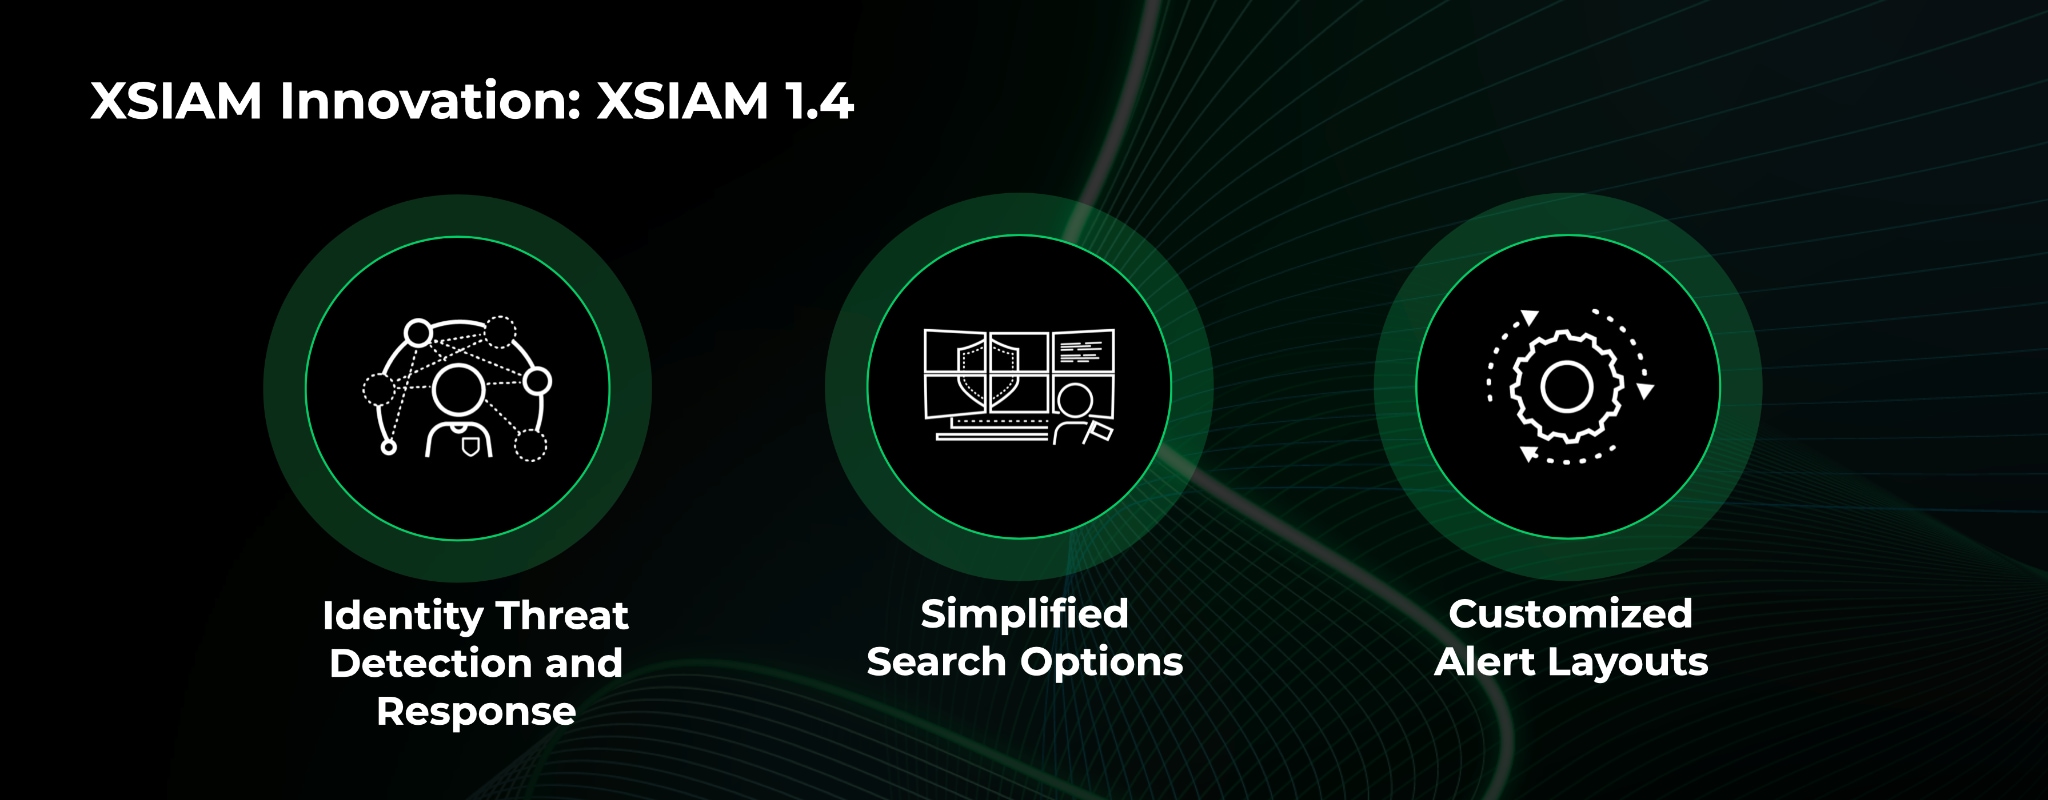 XSIAM Innovation: XSIAM 1.4